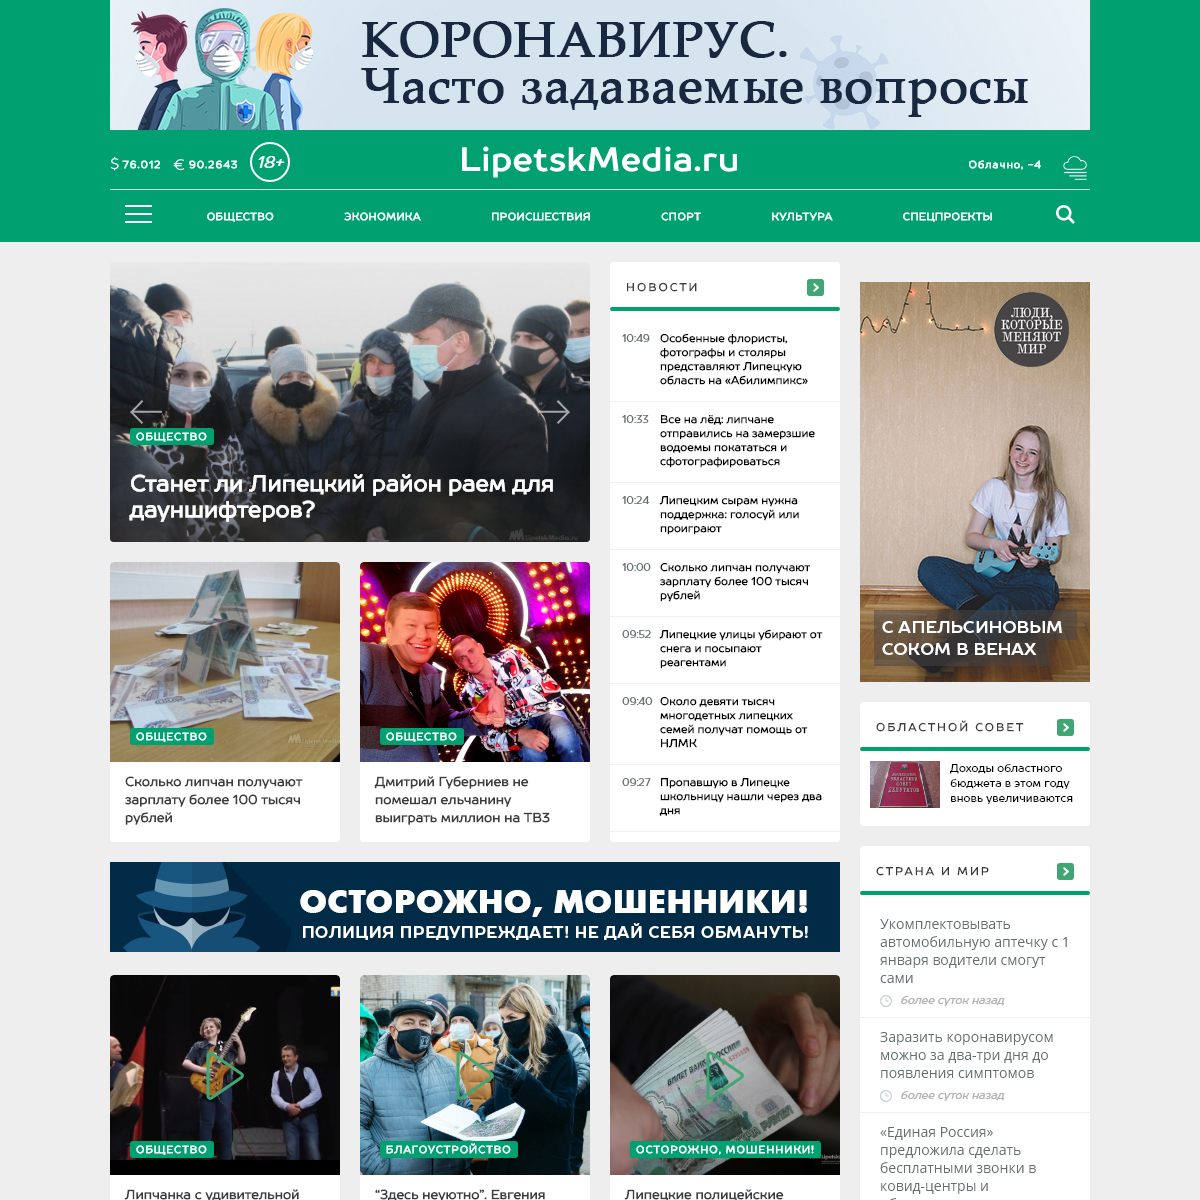 A complete backup of lipetskmedia.ru